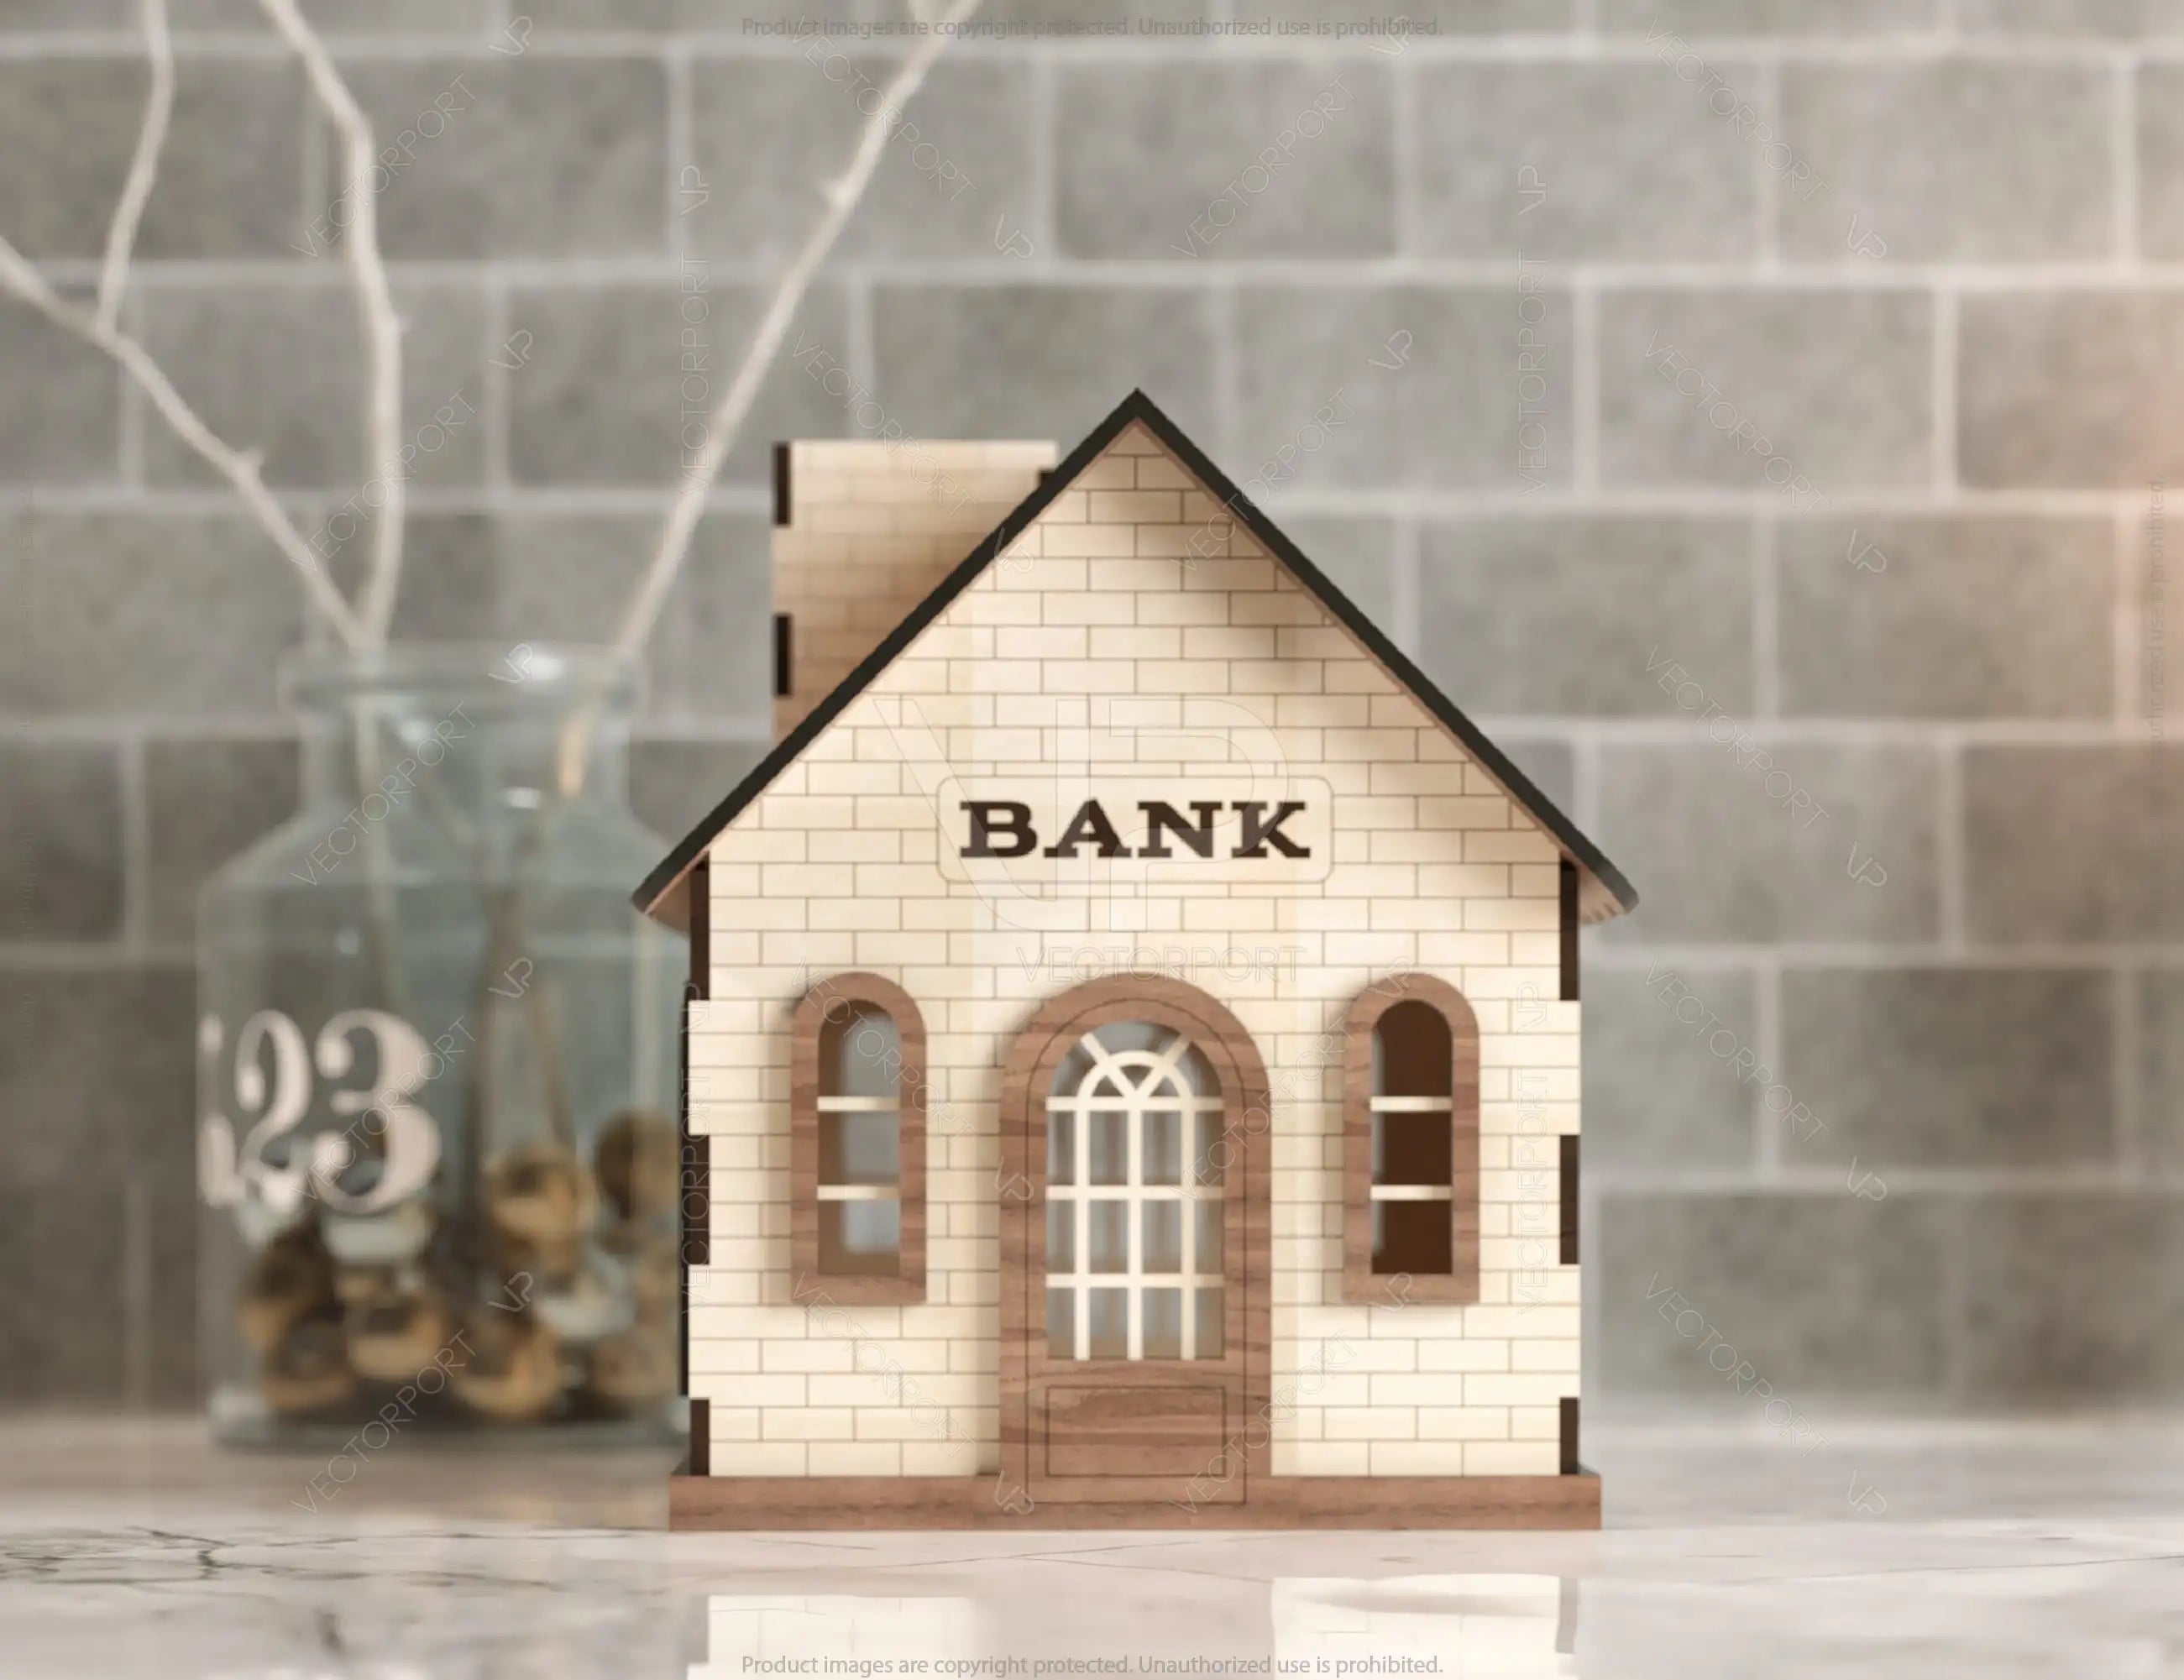 Wooden Plywood Piggy bank house money saving cash box Laser Cutting Home Digital Download |#U188|